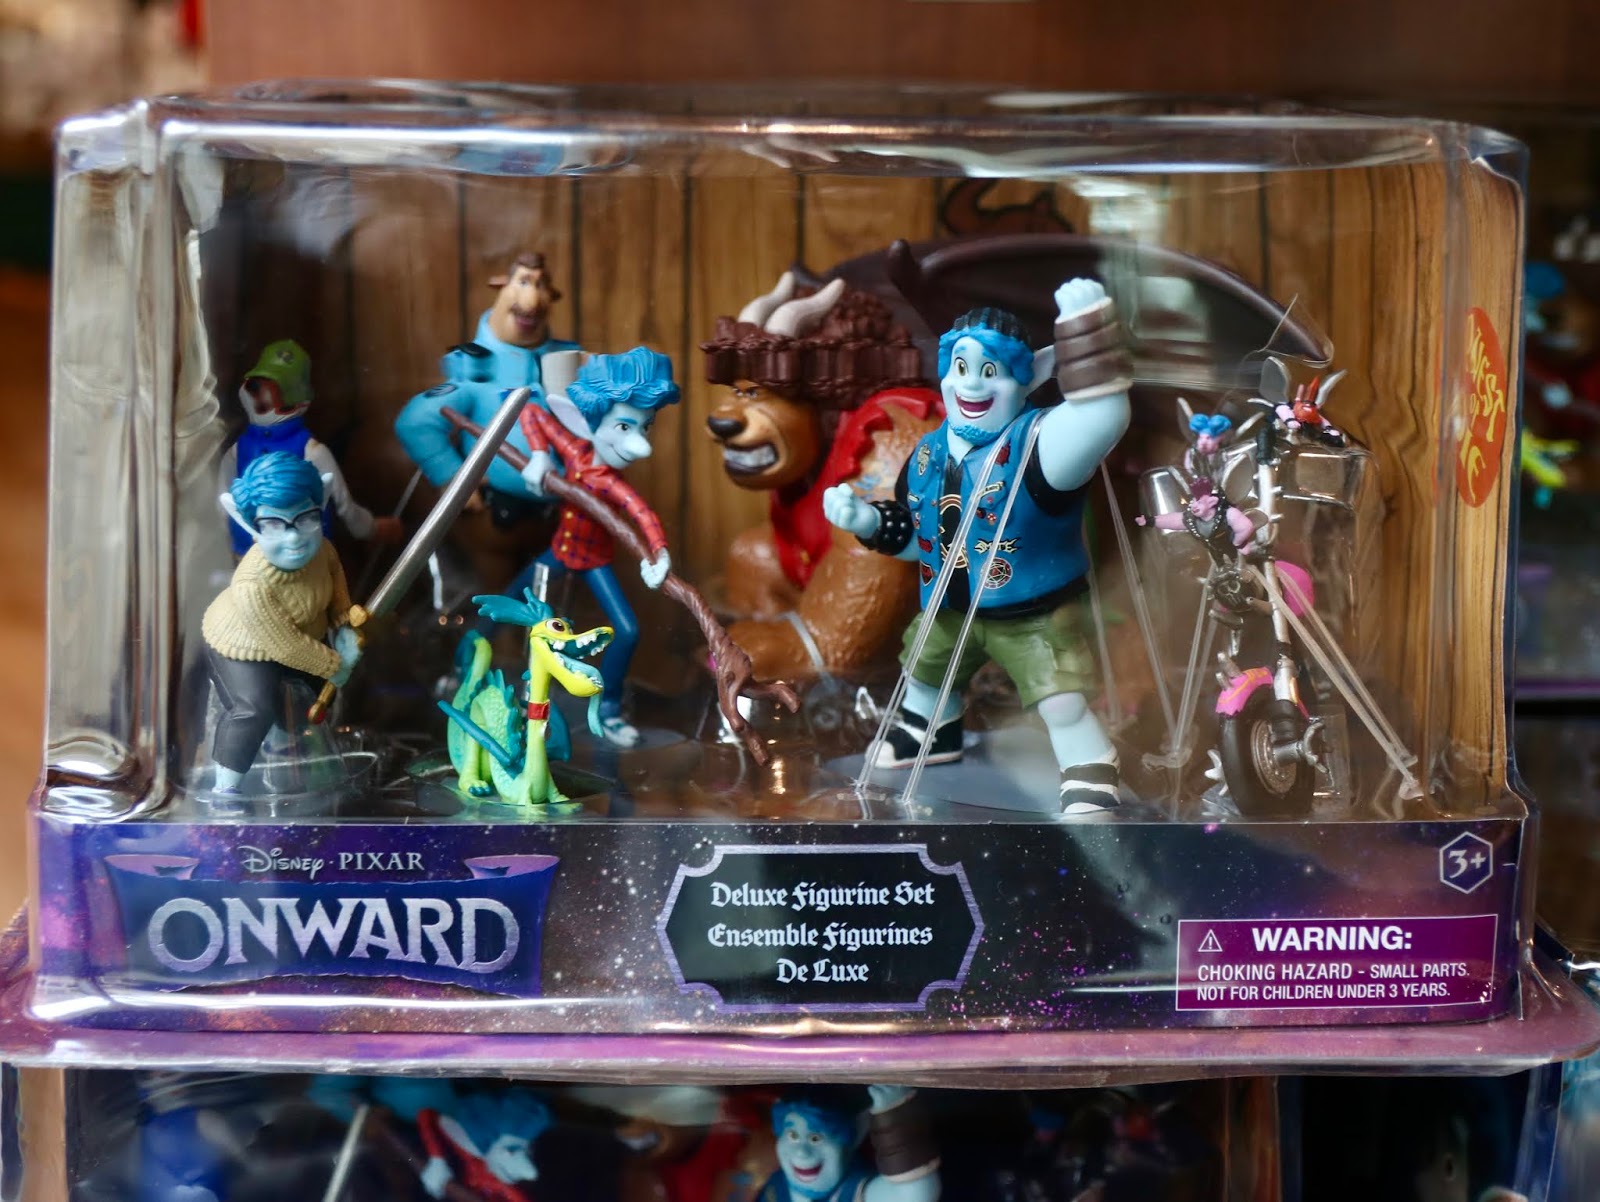 pixar onward the disney store merchandise toys release 2020 